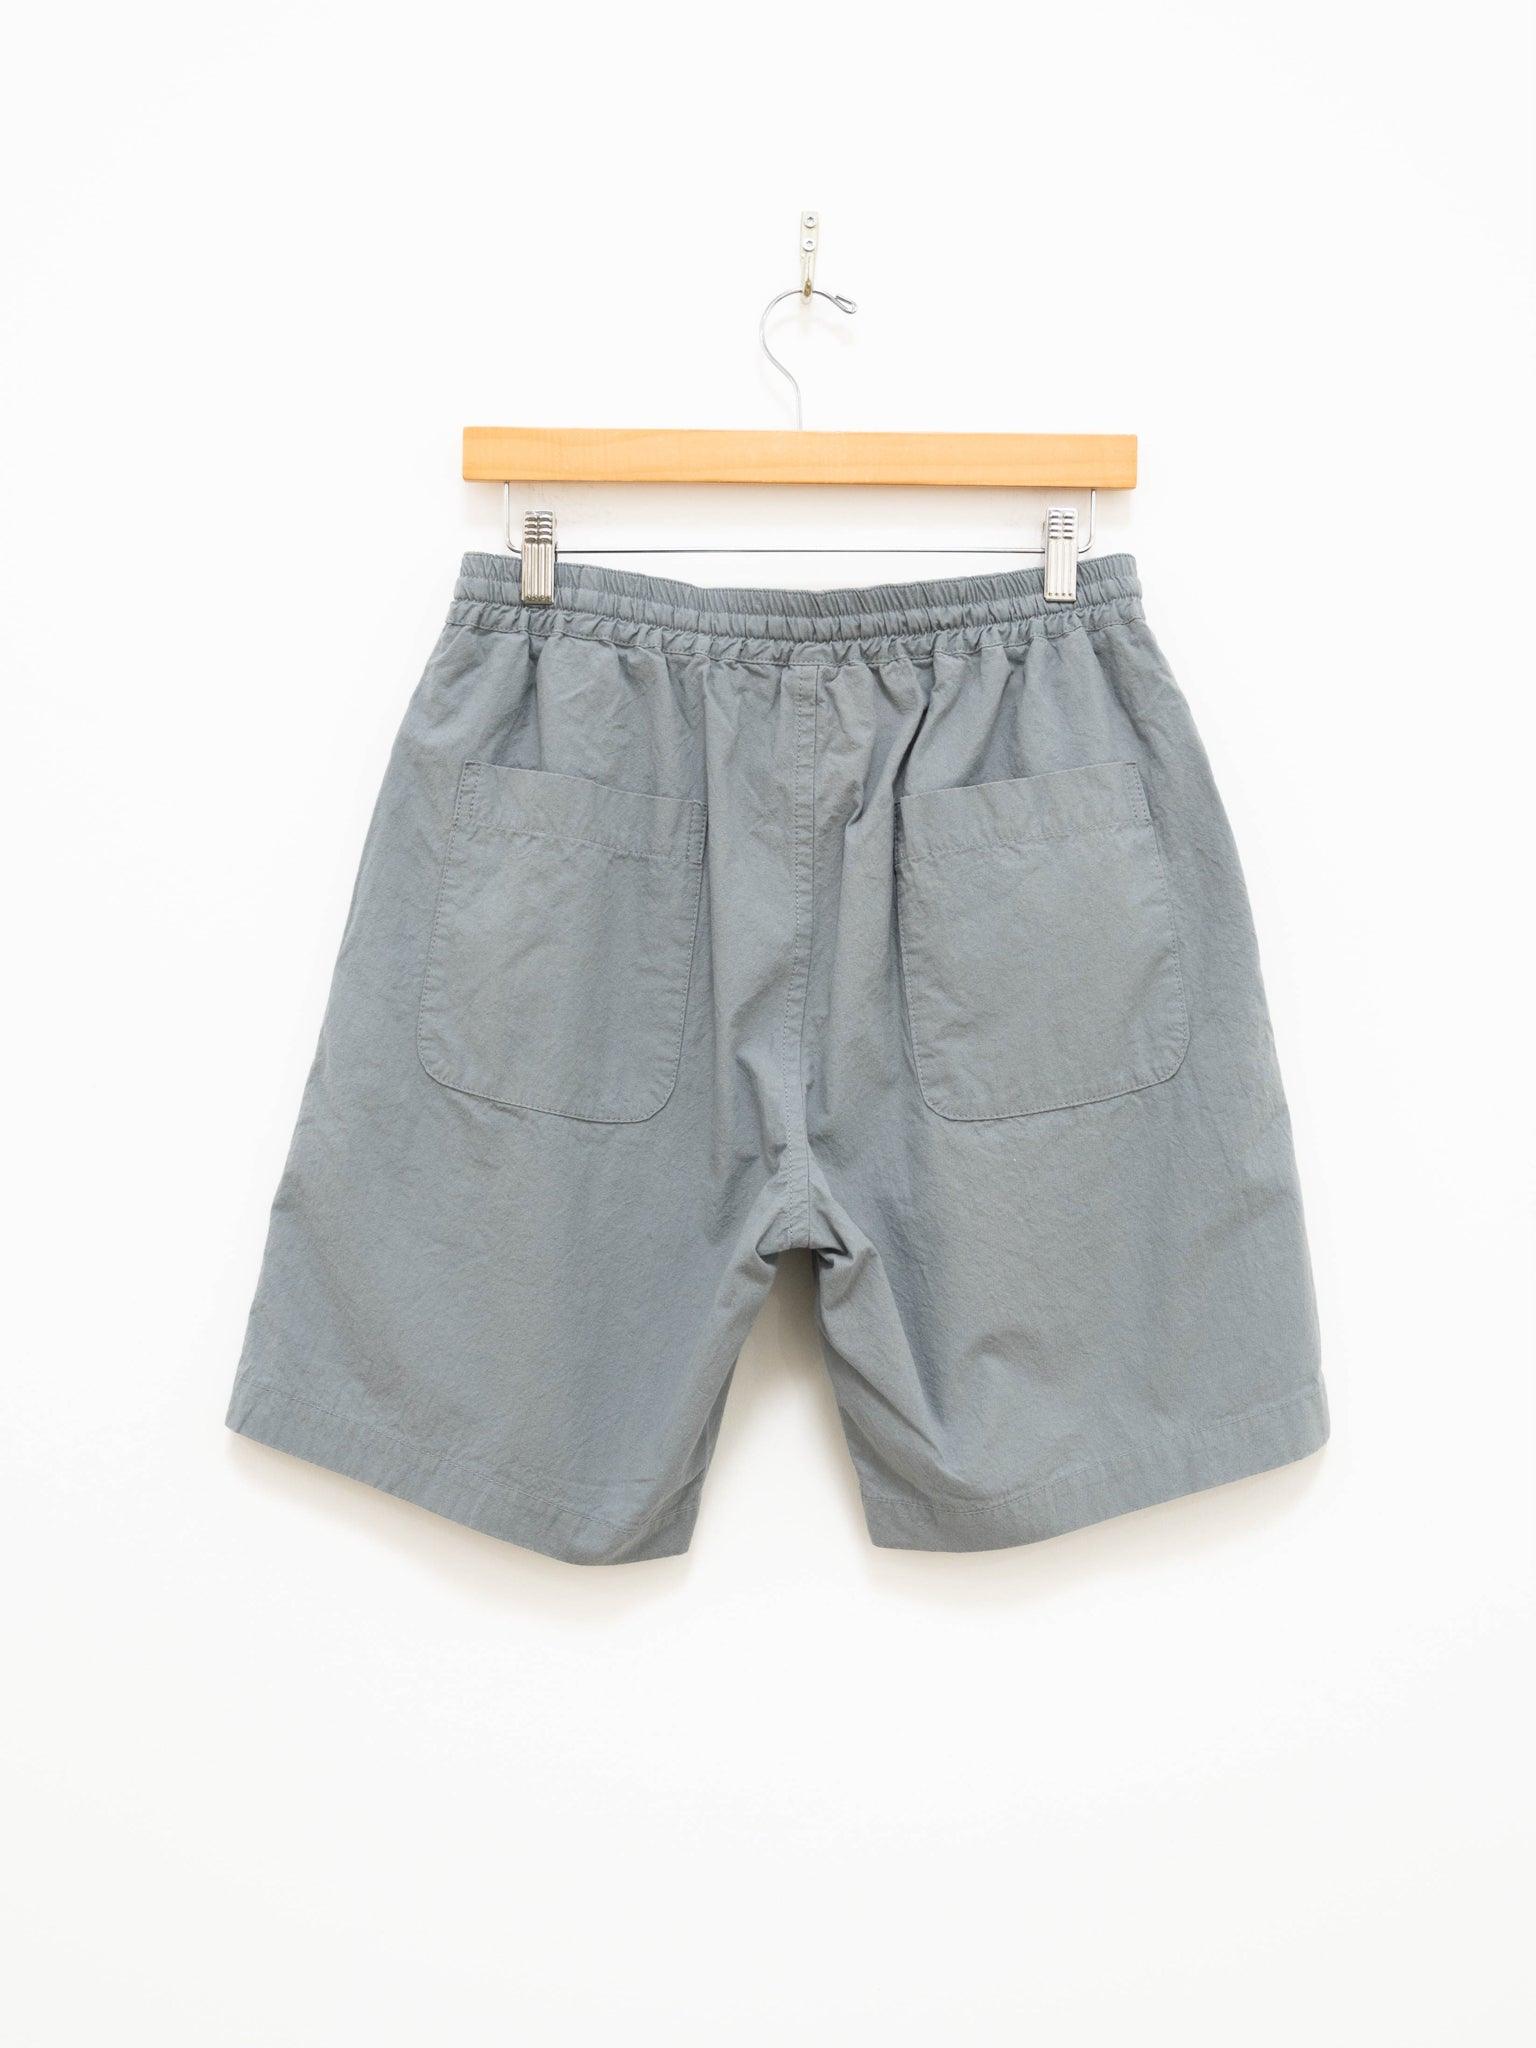 Namu Shop - Fujito Line Easy Shorts - Blue Gray